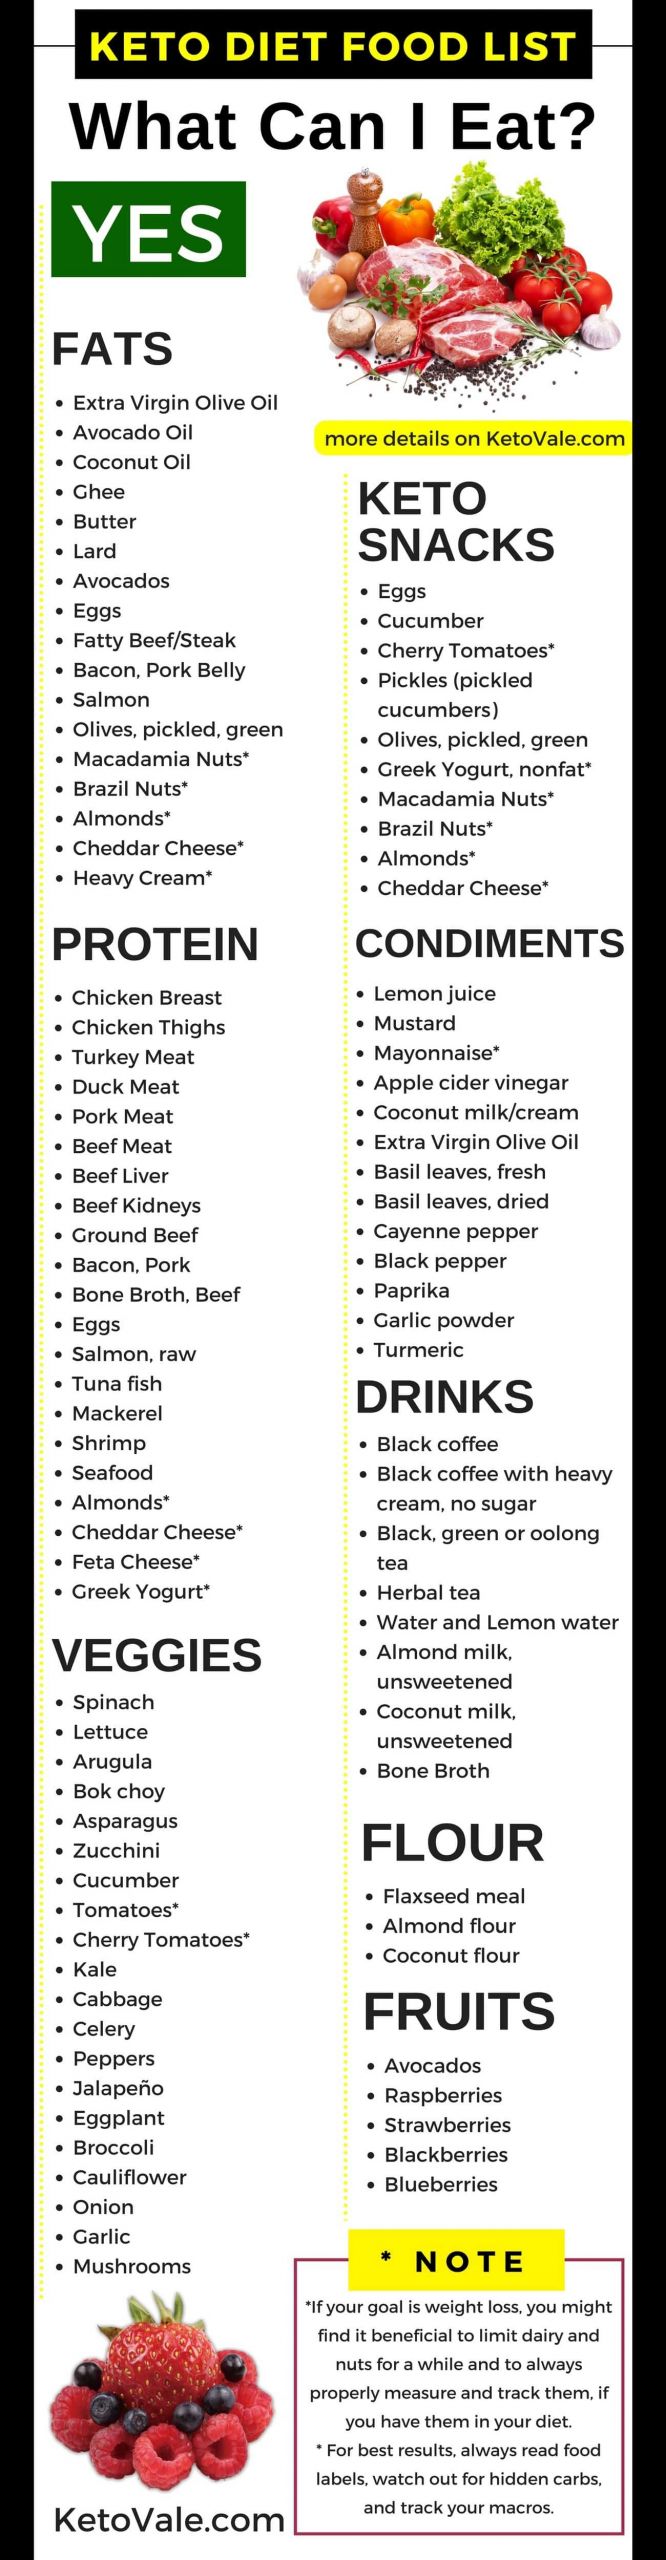 Keto Diet Food List
 Keto Diet Food List Low Carb Grocery Shopping Guide PDF